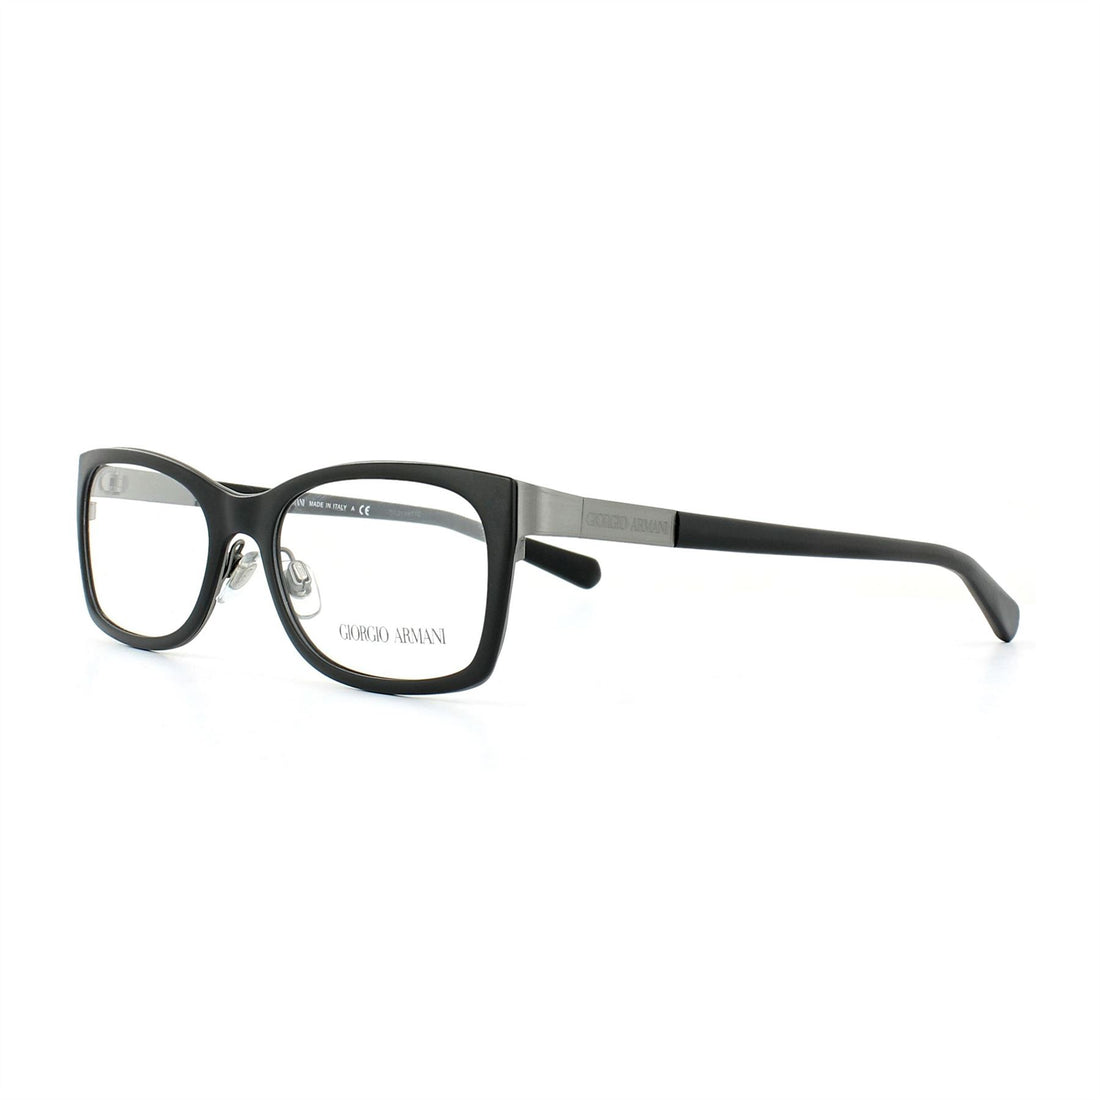 Giorgio Armani AR5013 Glasses Frames Matte Brushed Gunmetal